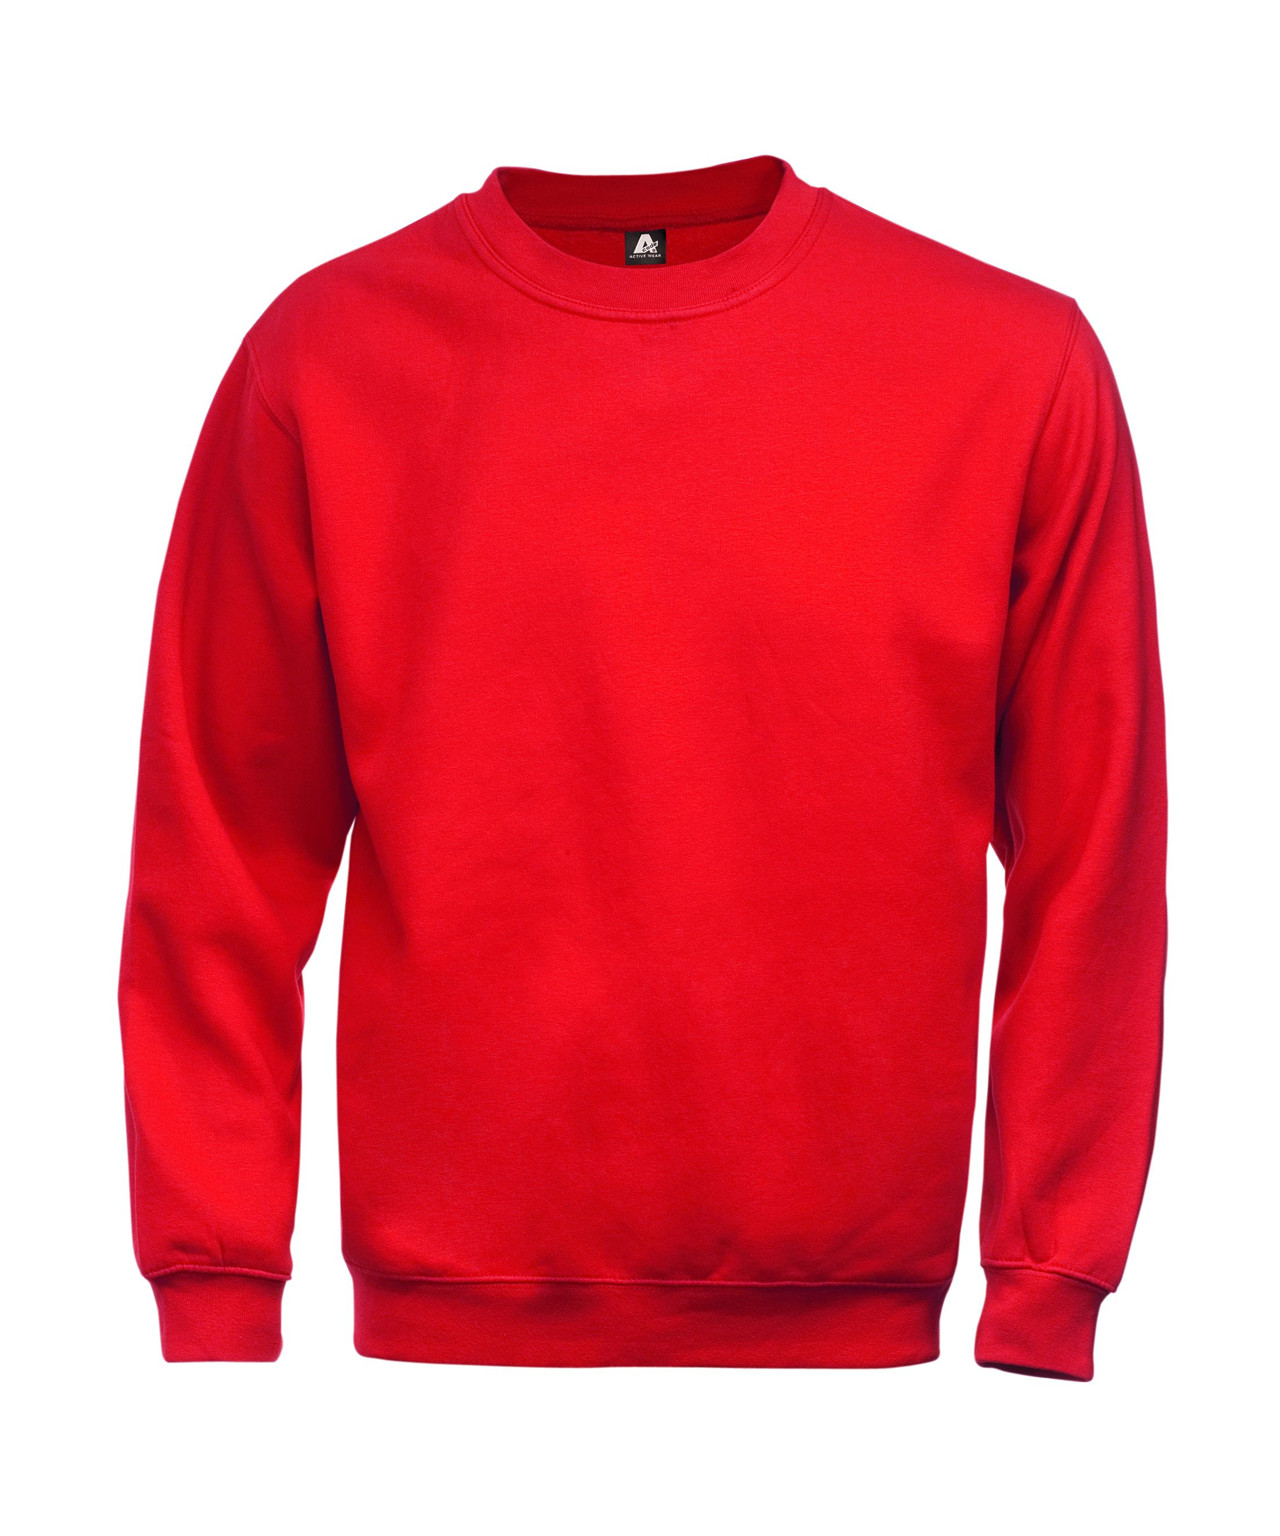 Se Kansas/Fristads A-Code klassisk sweatshirt (Rød, M) hos Specialbutikken